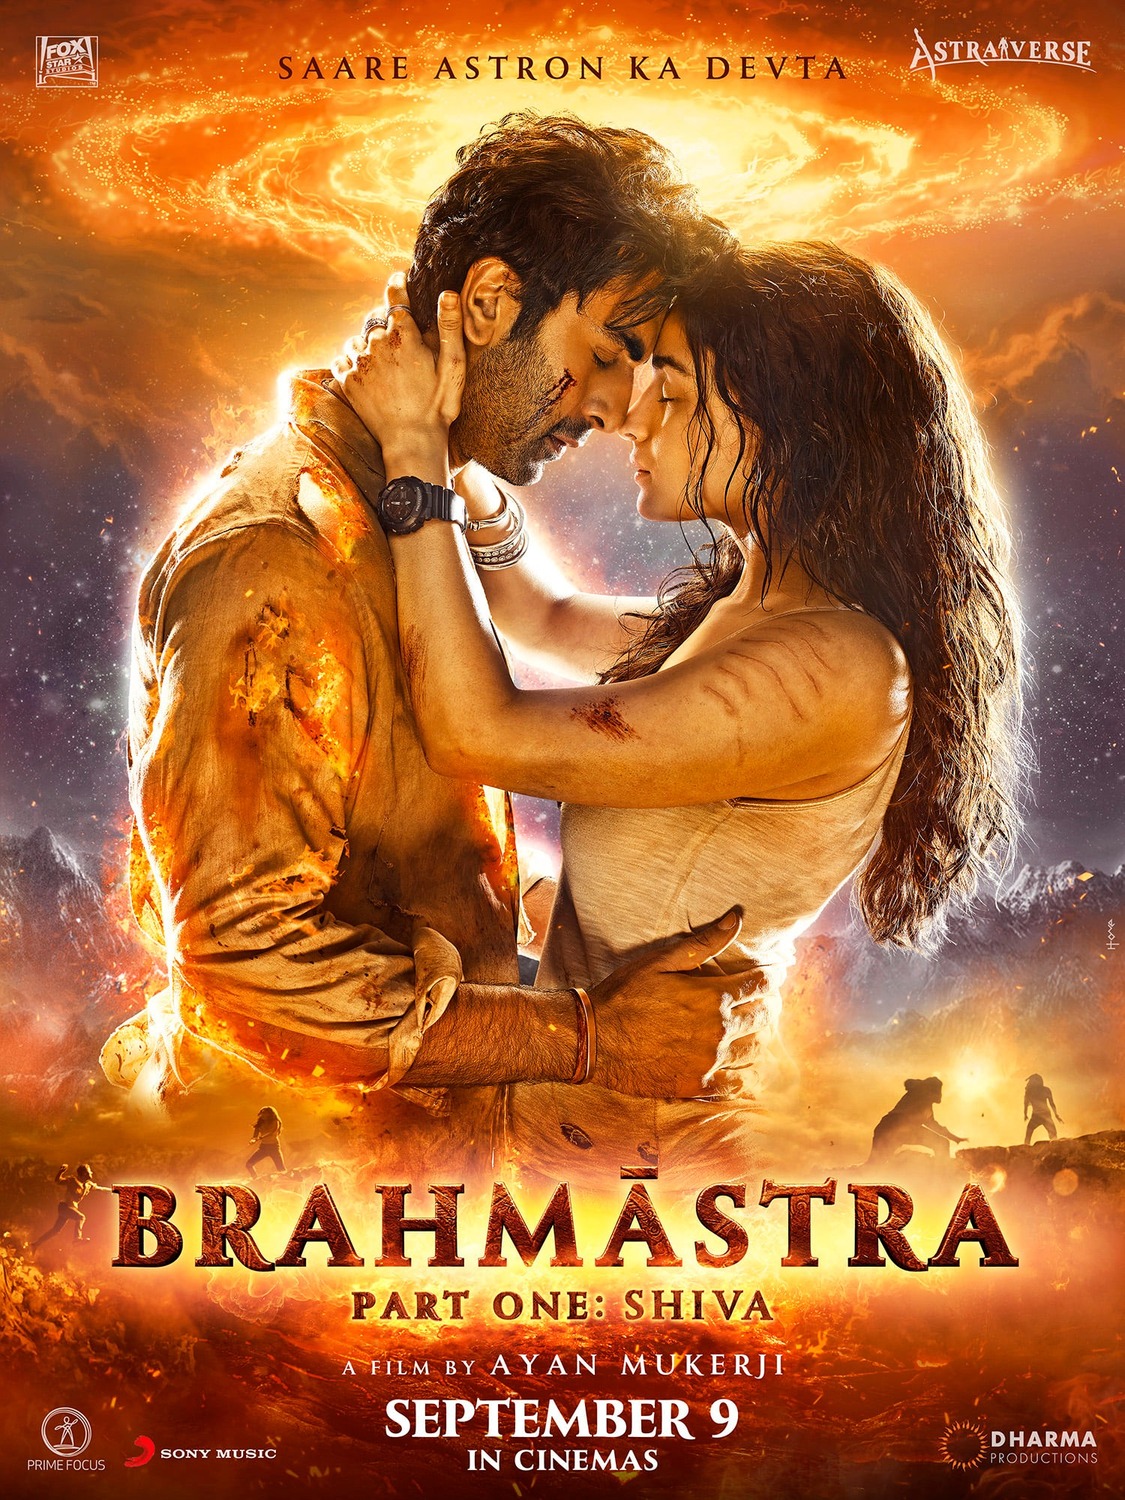 Extra Large Movie Poster Image for Brahmastra Part One: Shiva 